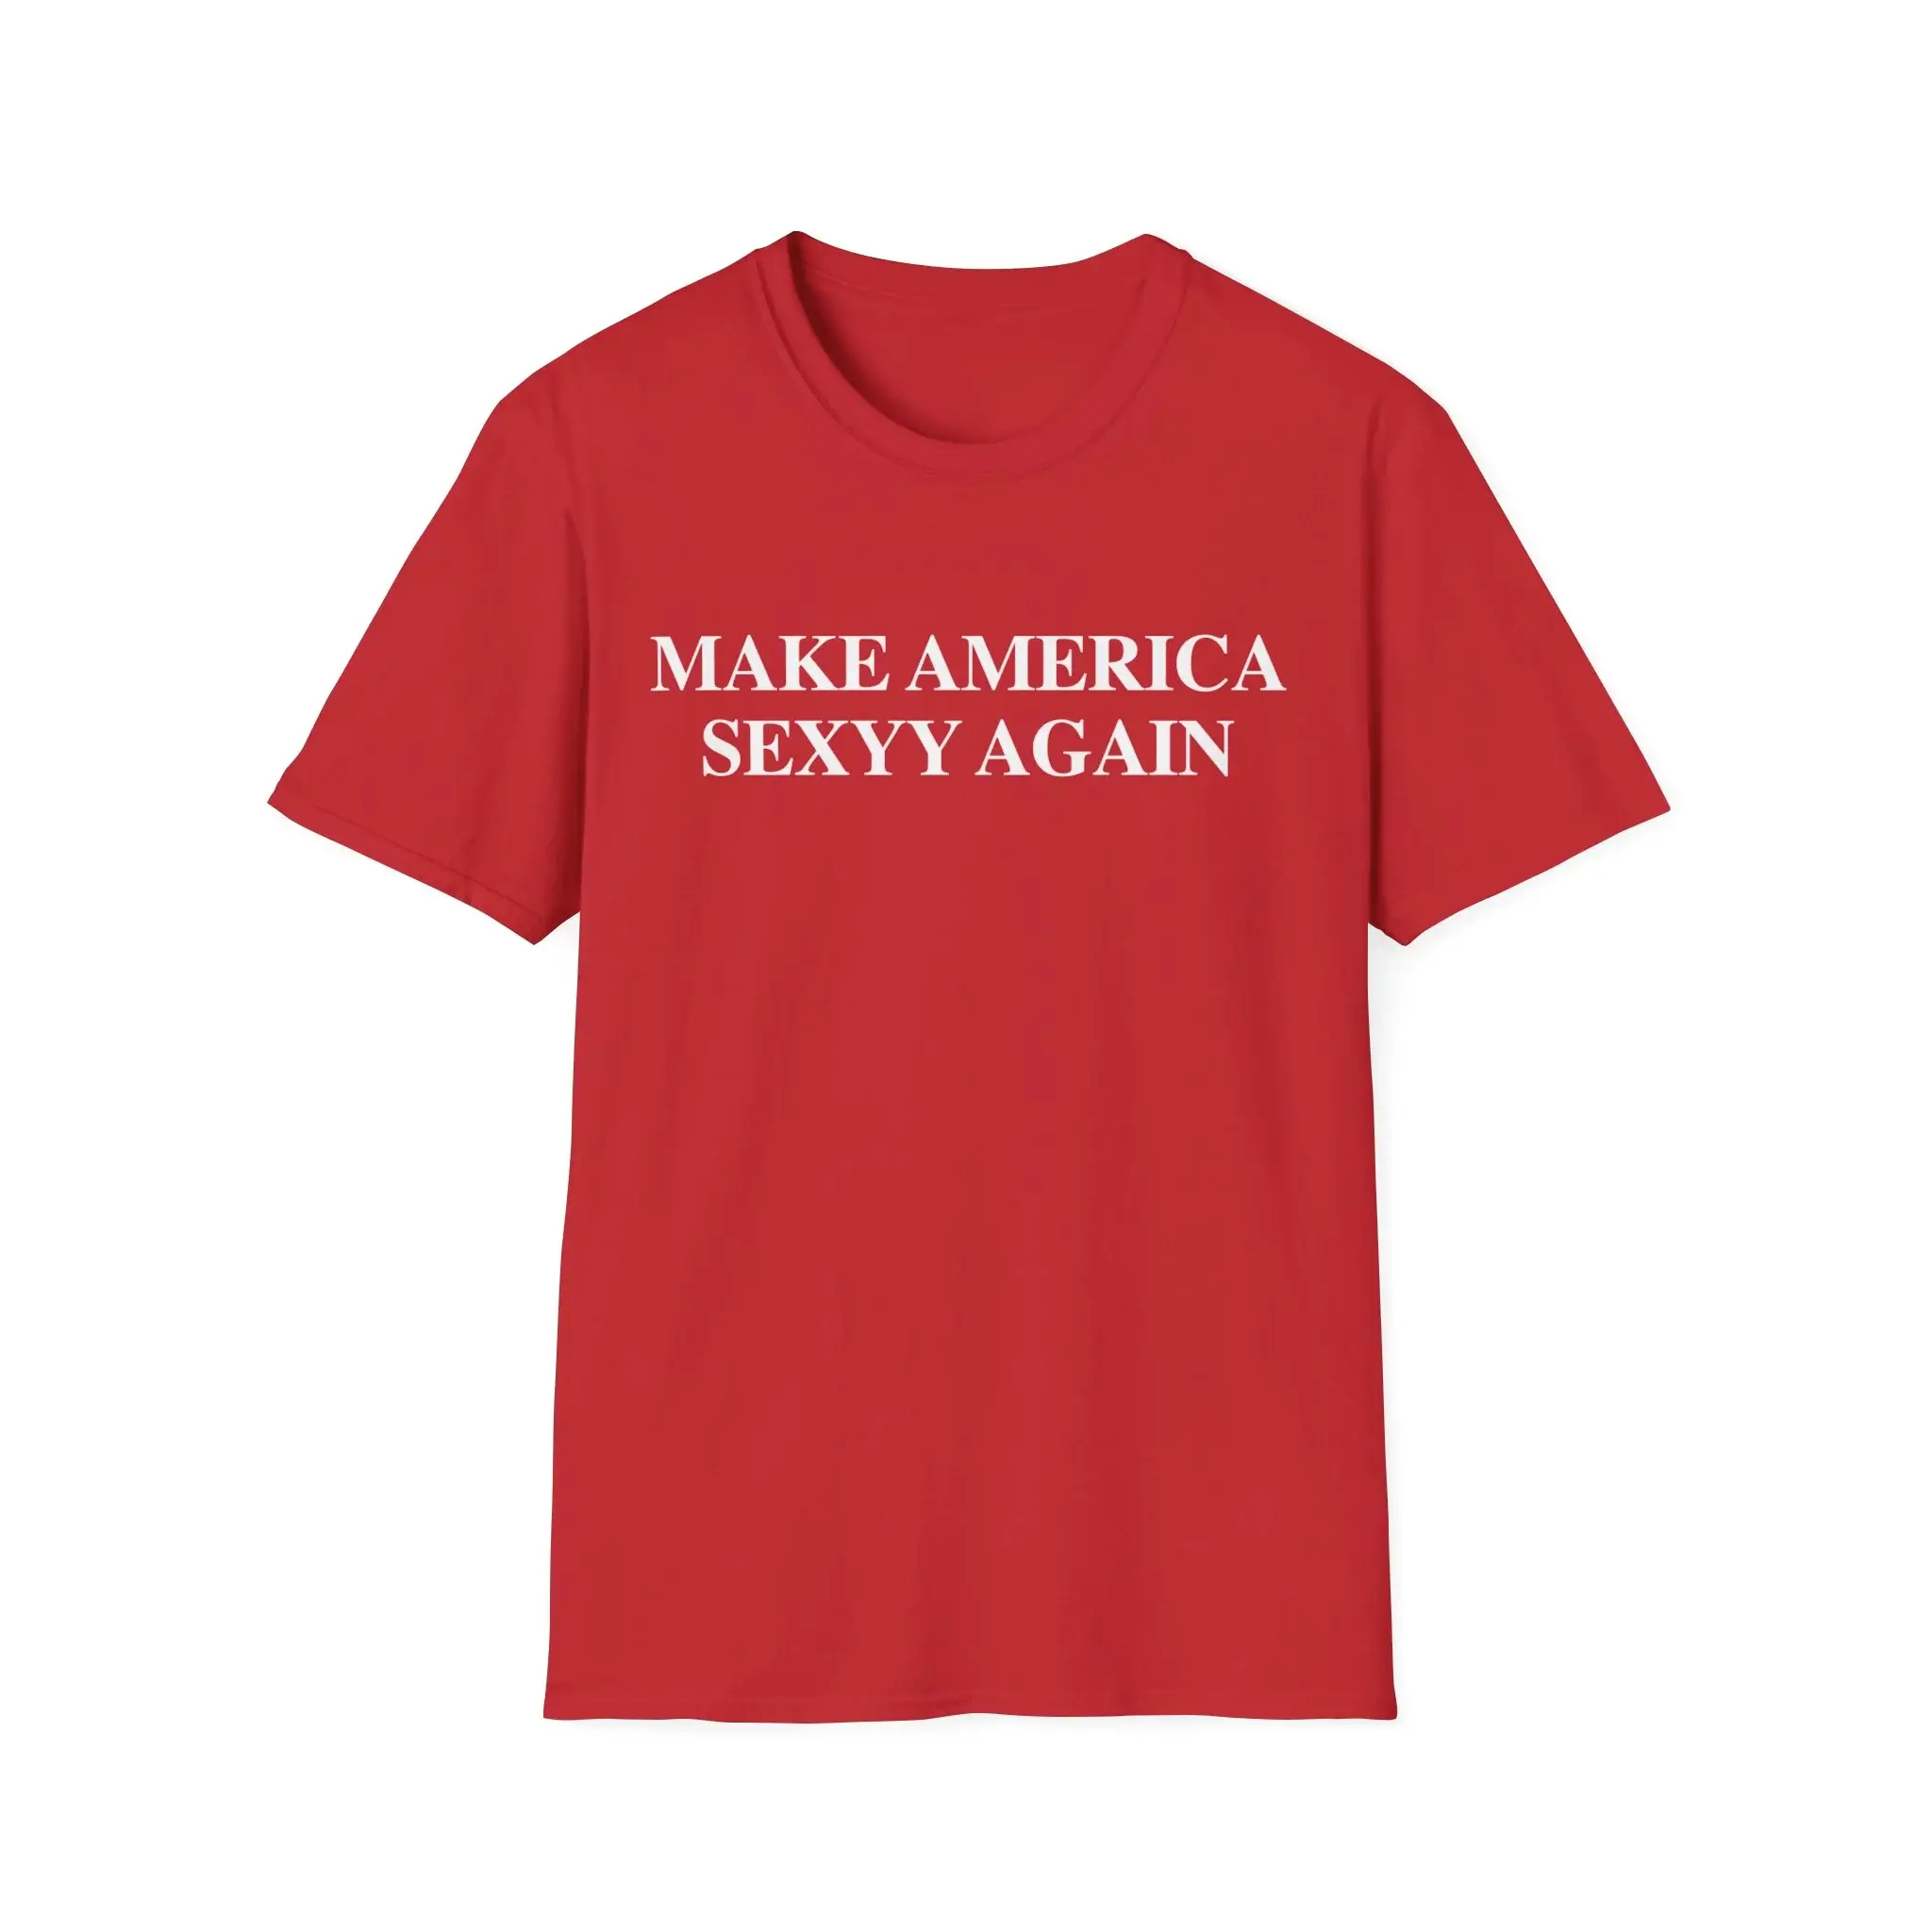 Make America Sexyy Again Shirt